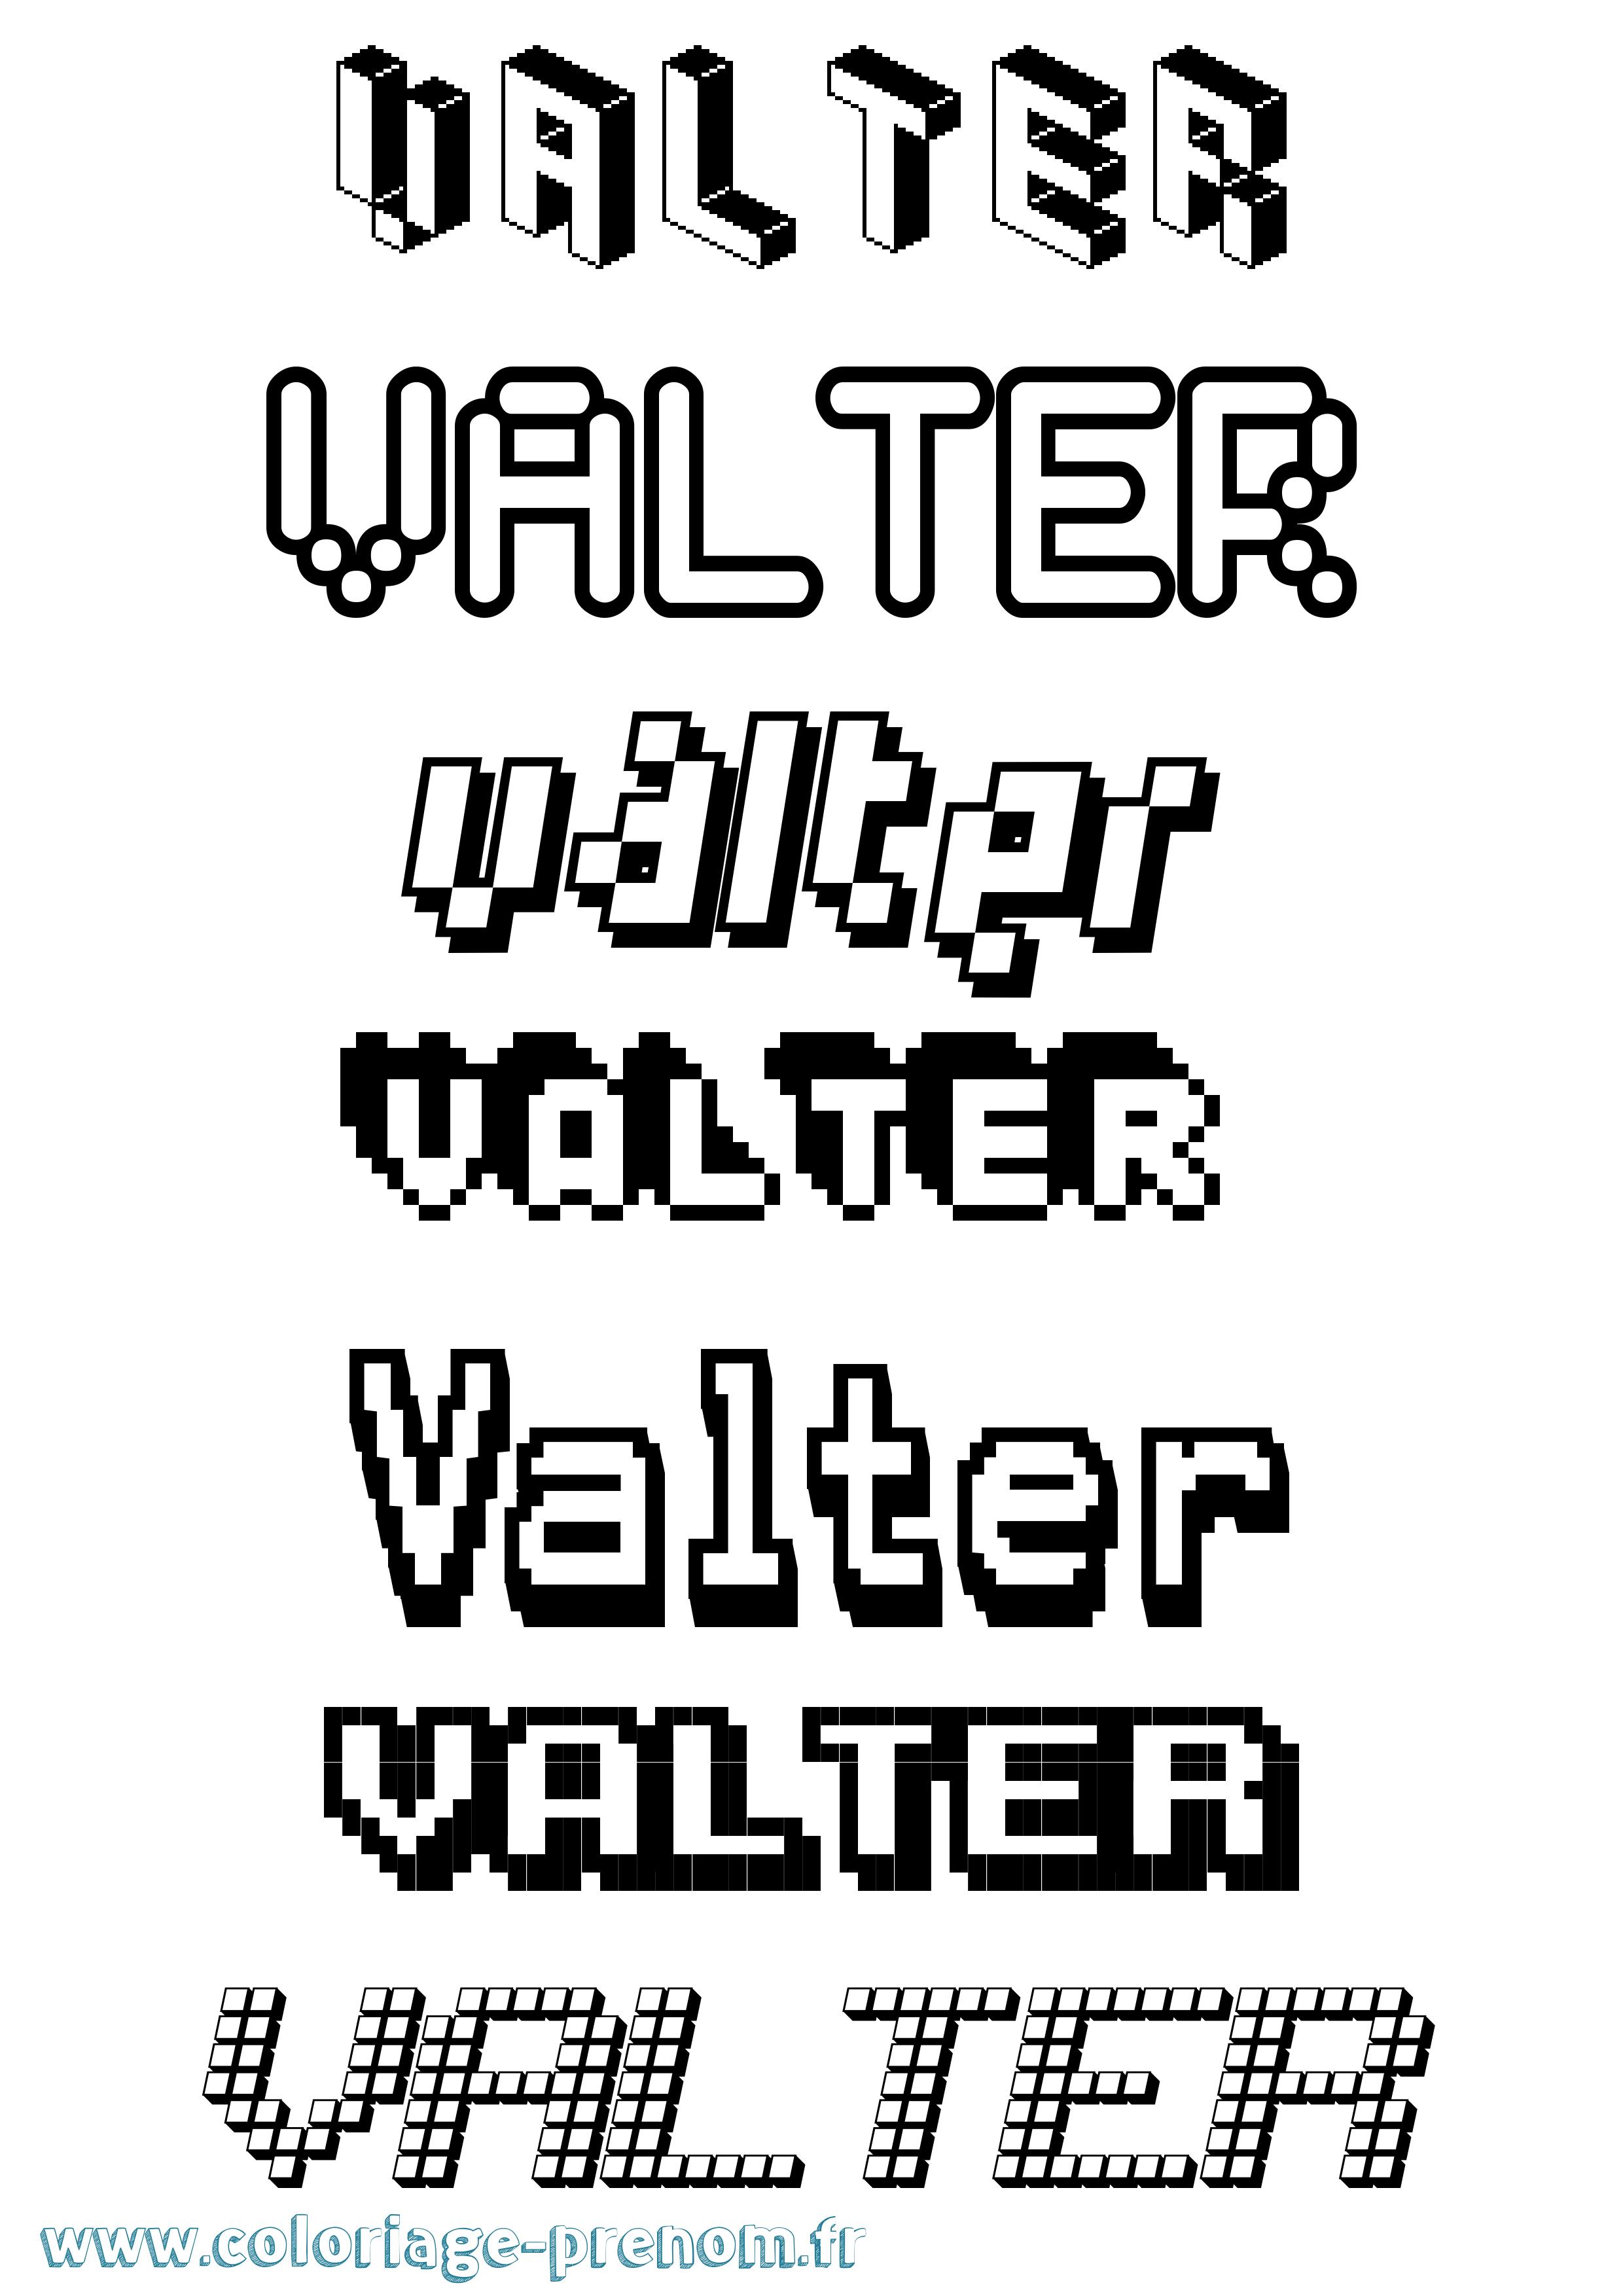 Coloriage prénom Valter Pixel